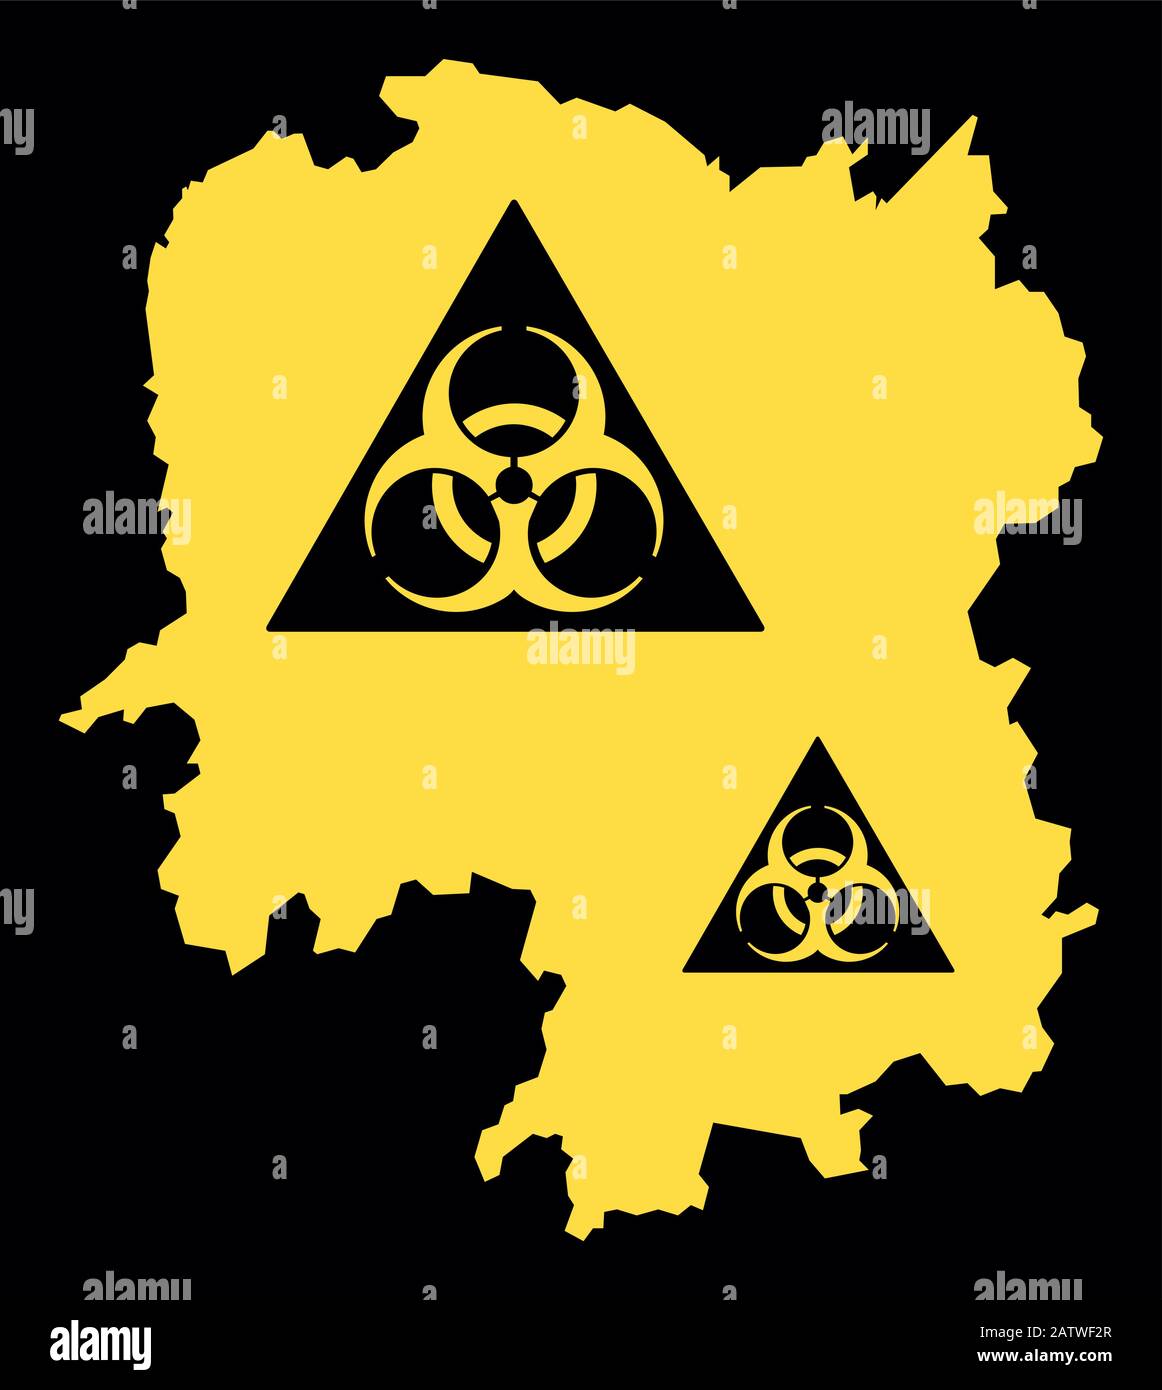 Hunan province map of China with biohazard virus sign Stock Vector